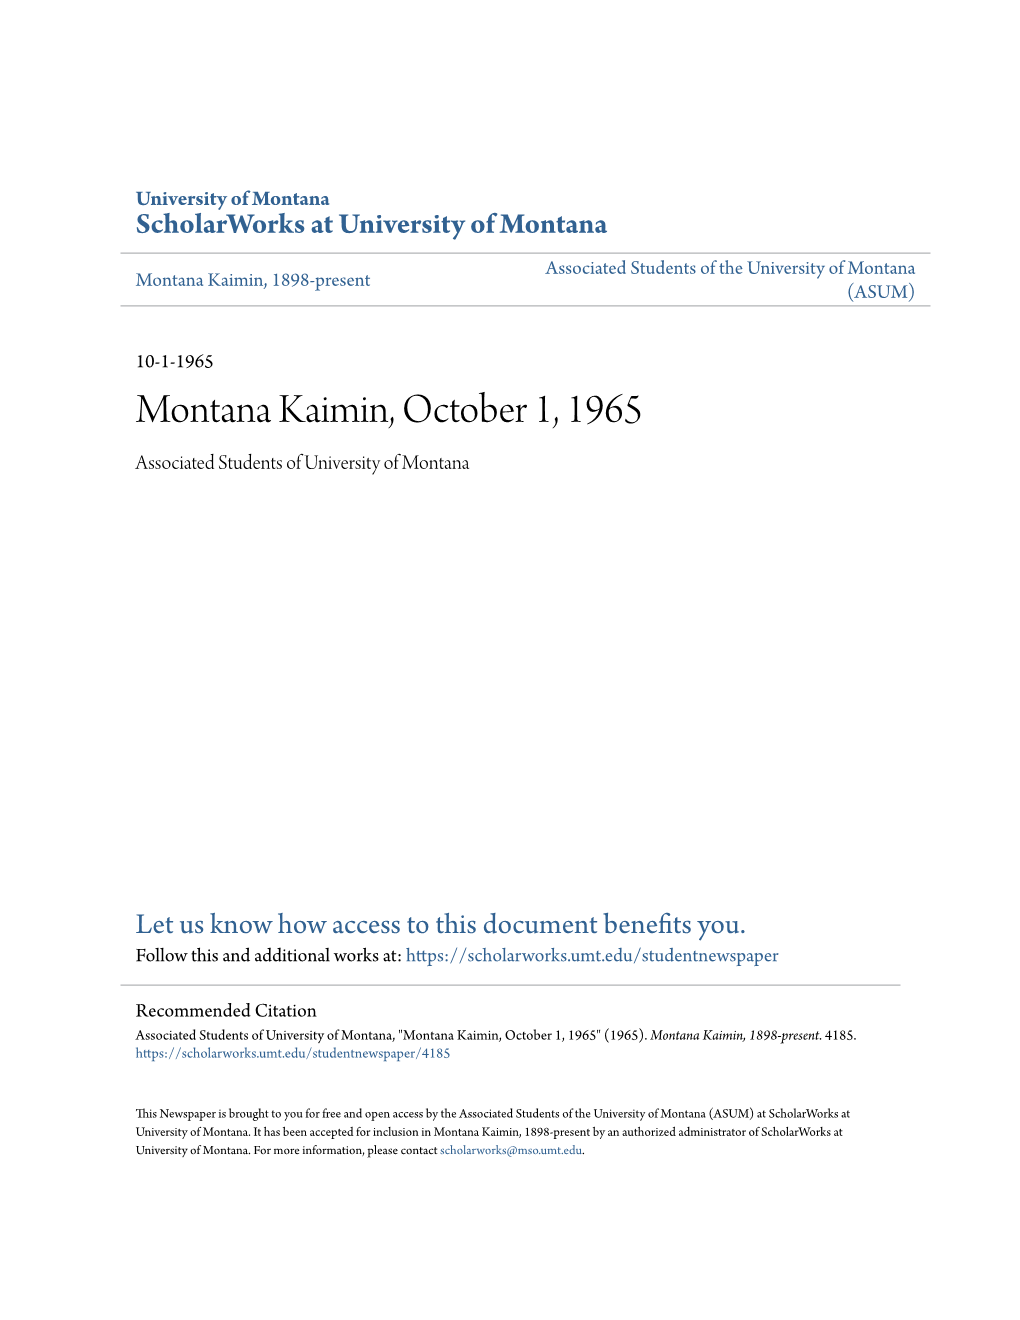 Montana Kaimin, October 1, 1965 Associated Students of University of Montana